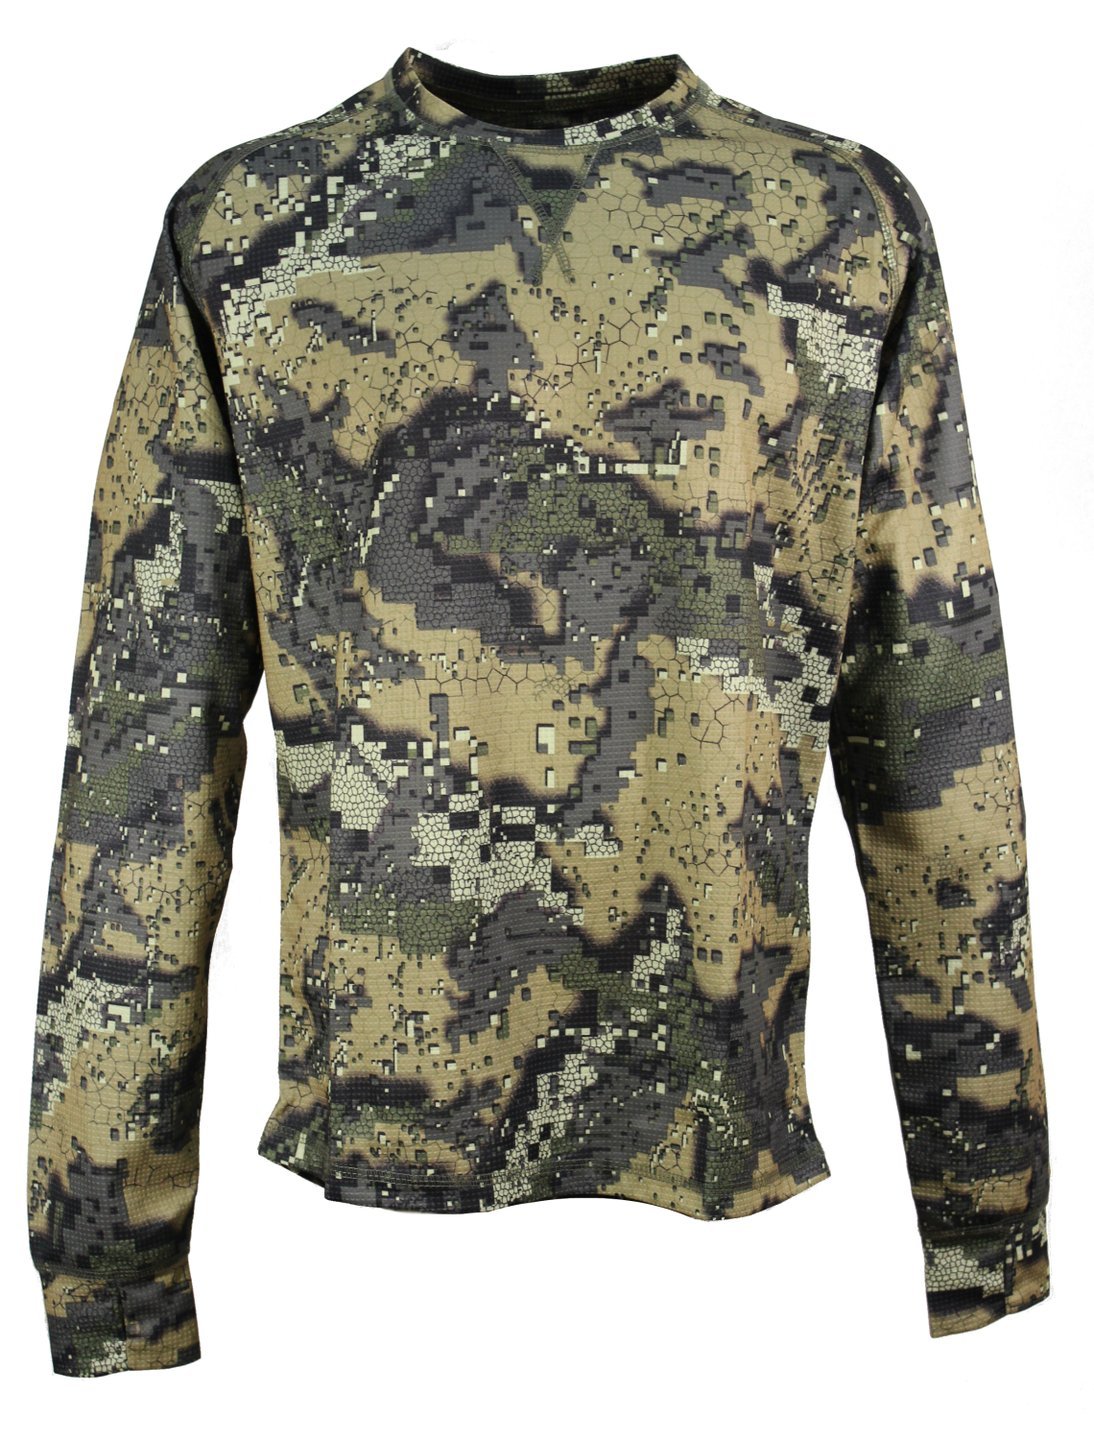 Джемпер охотничий  Remington Men's  Camouflage T-Shirt  APG Hunting Camo, цвет Optifade, р. S (RM1305-999)